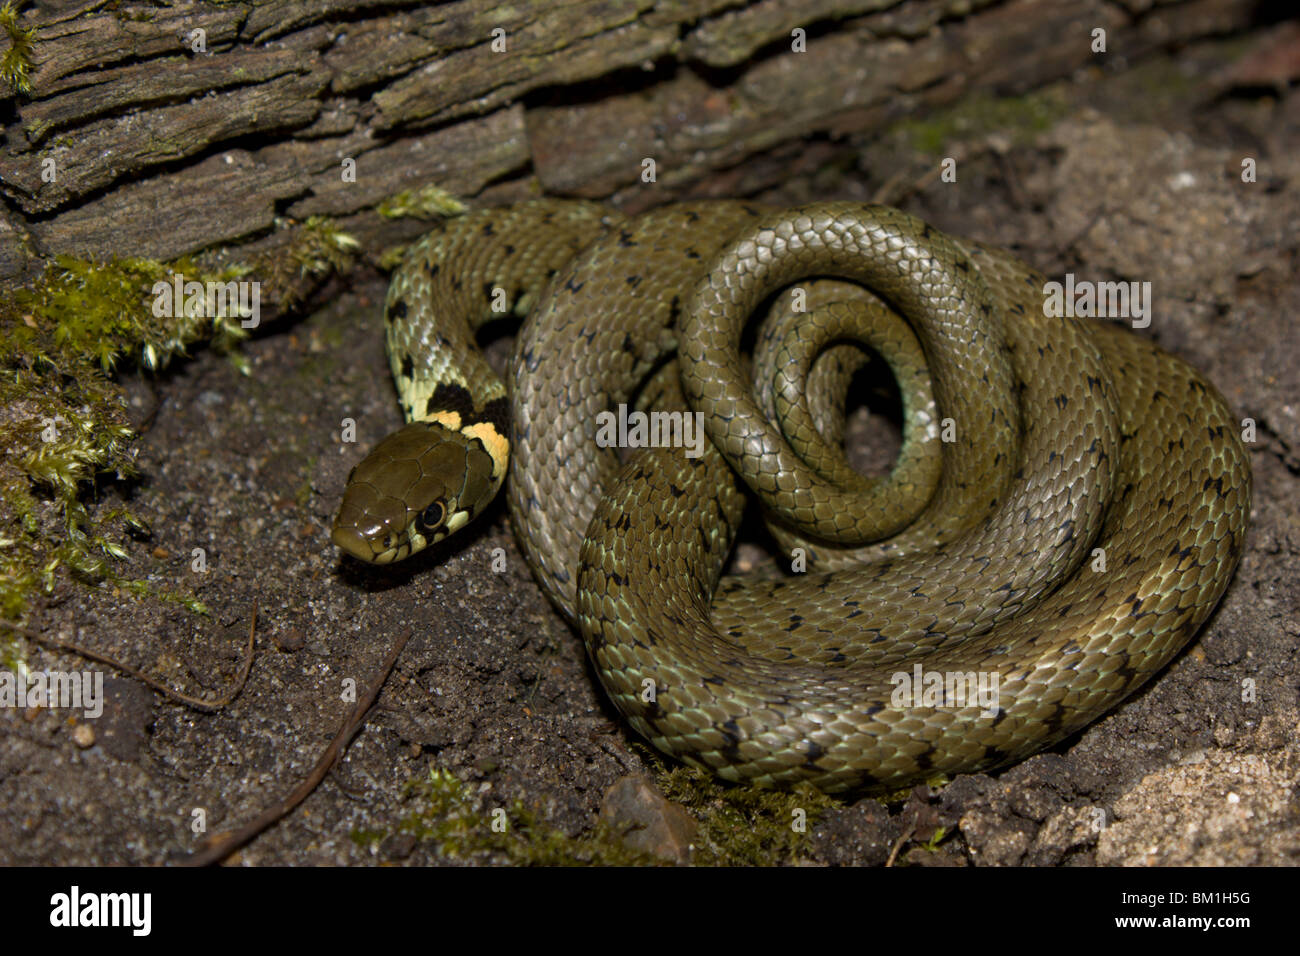 Grass snake (Natrix helvetica) found near a garden pond. Stock Photo